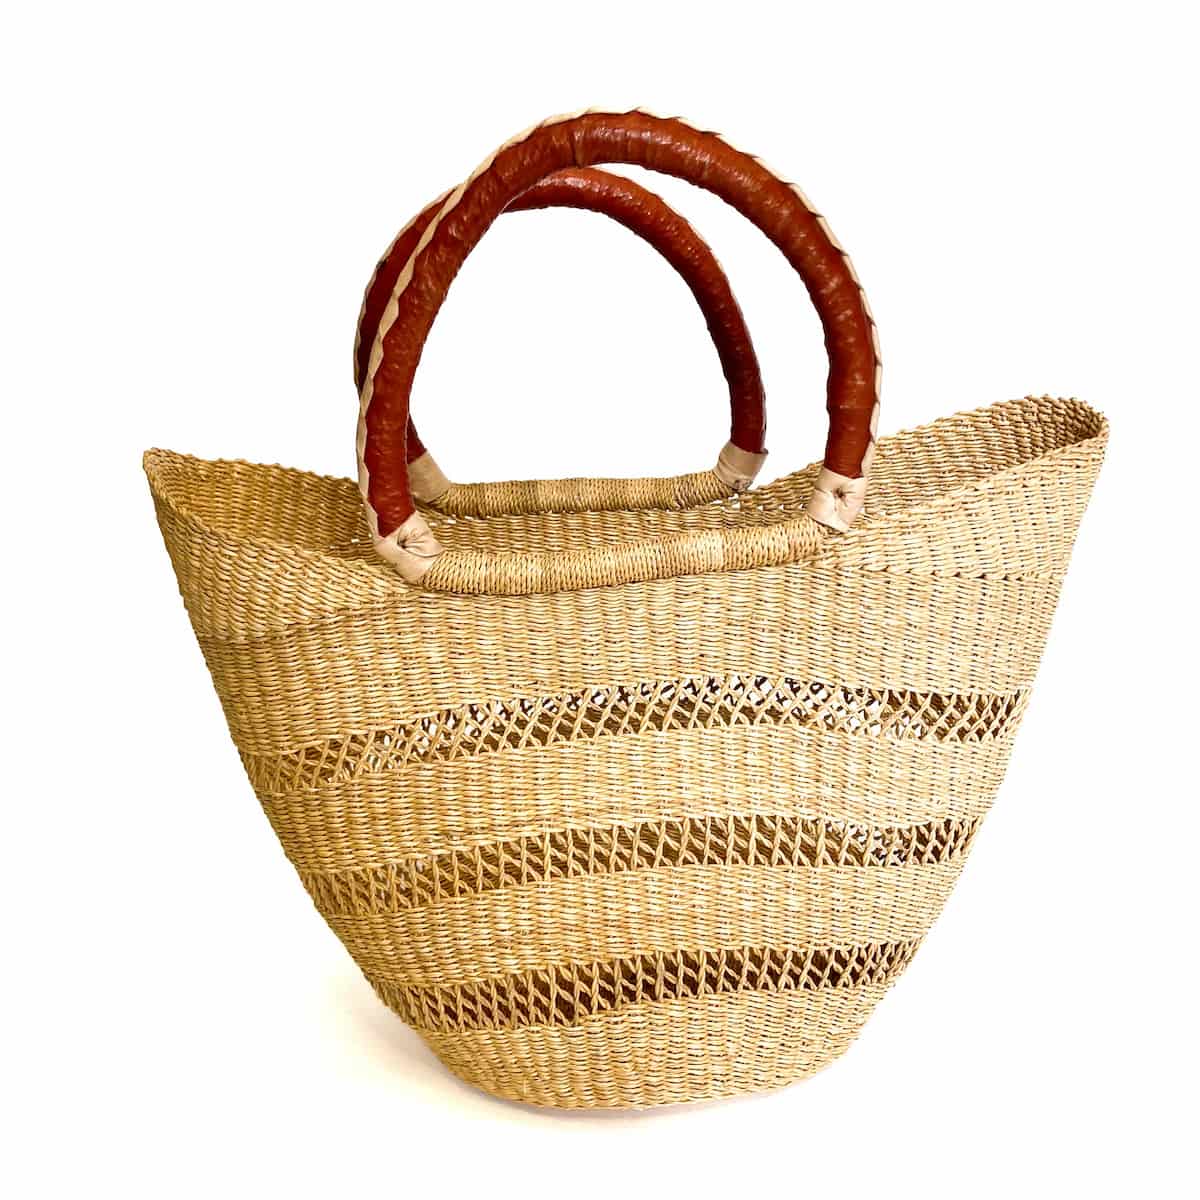 Frafra Medium Natural Open Weave U-shopper Basket, Terracotta handles with White detailing